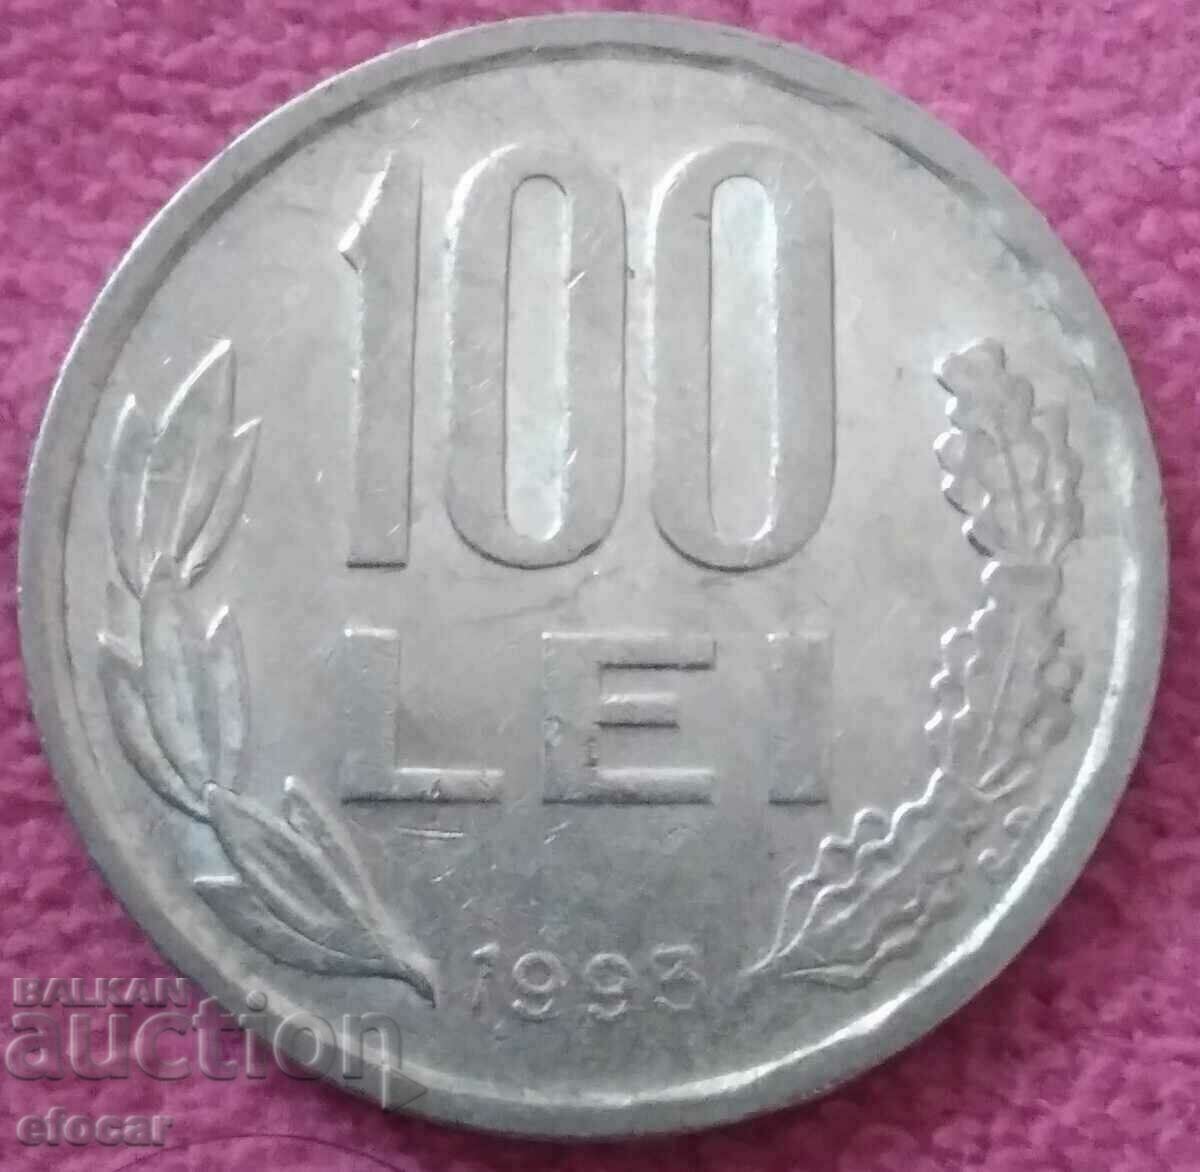 100 lei Romania 1993